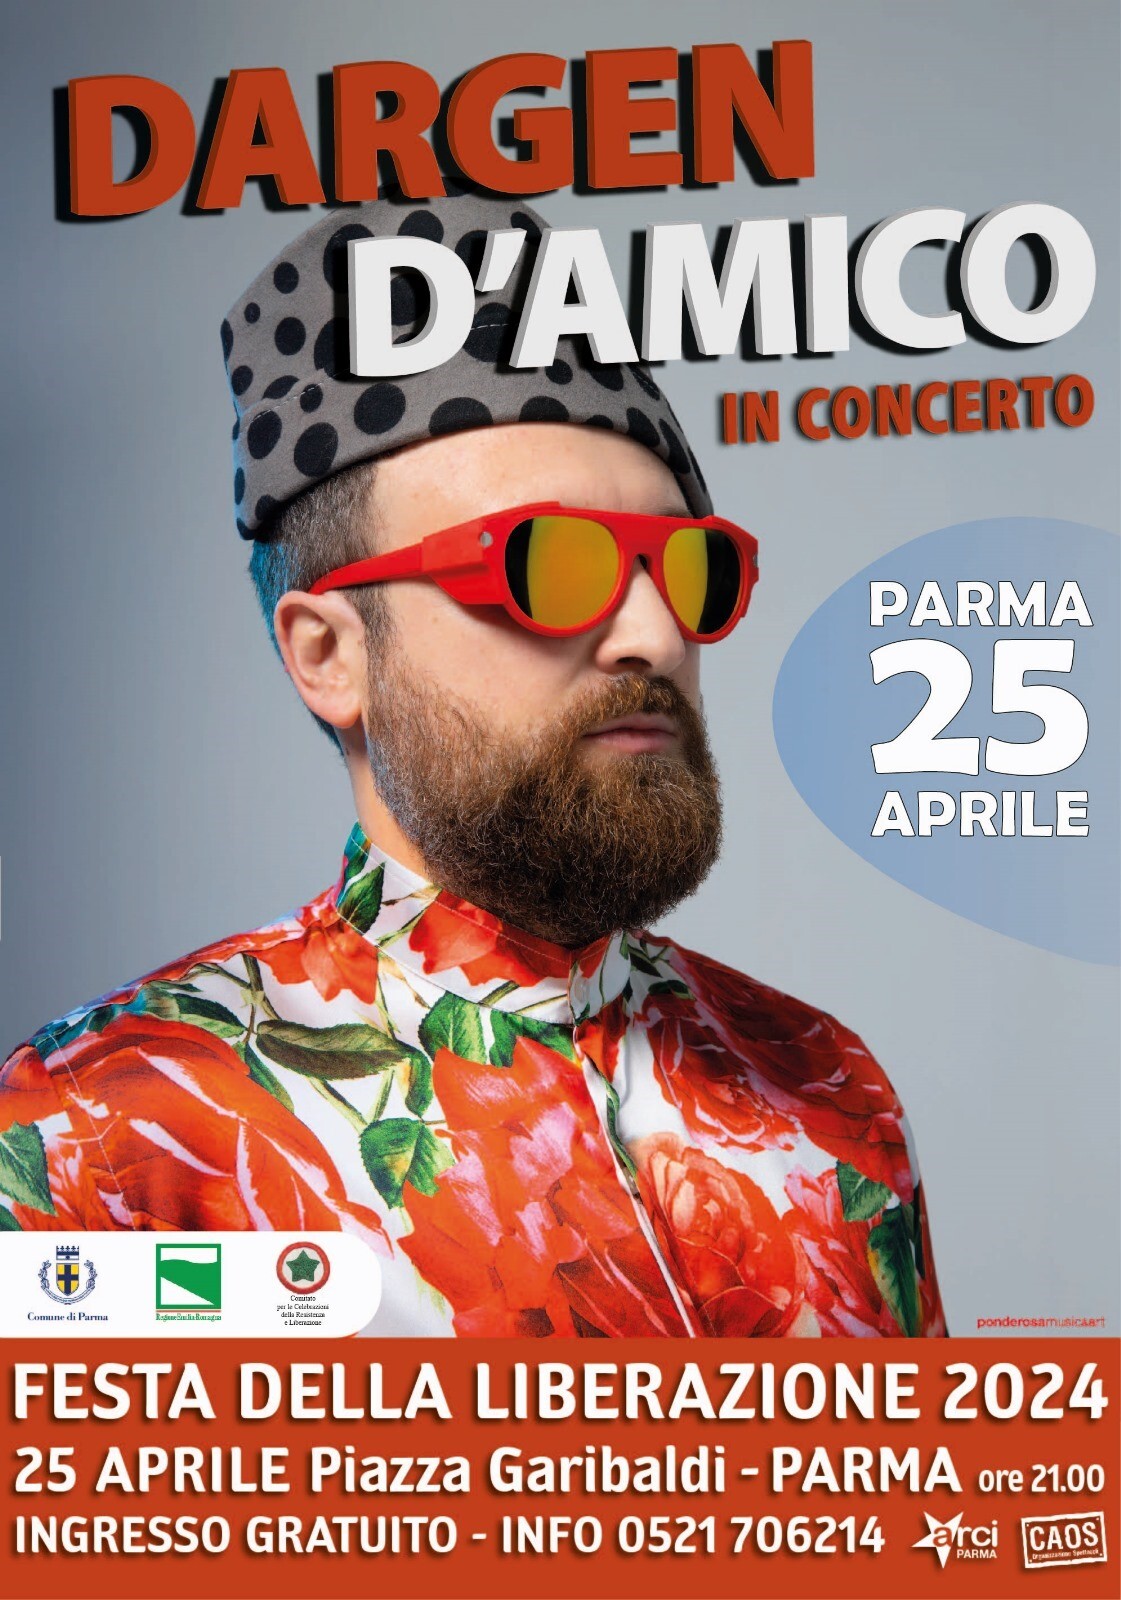 Concerto del 25 aprile con Dargen D’Amico in Piazza Garibaldi